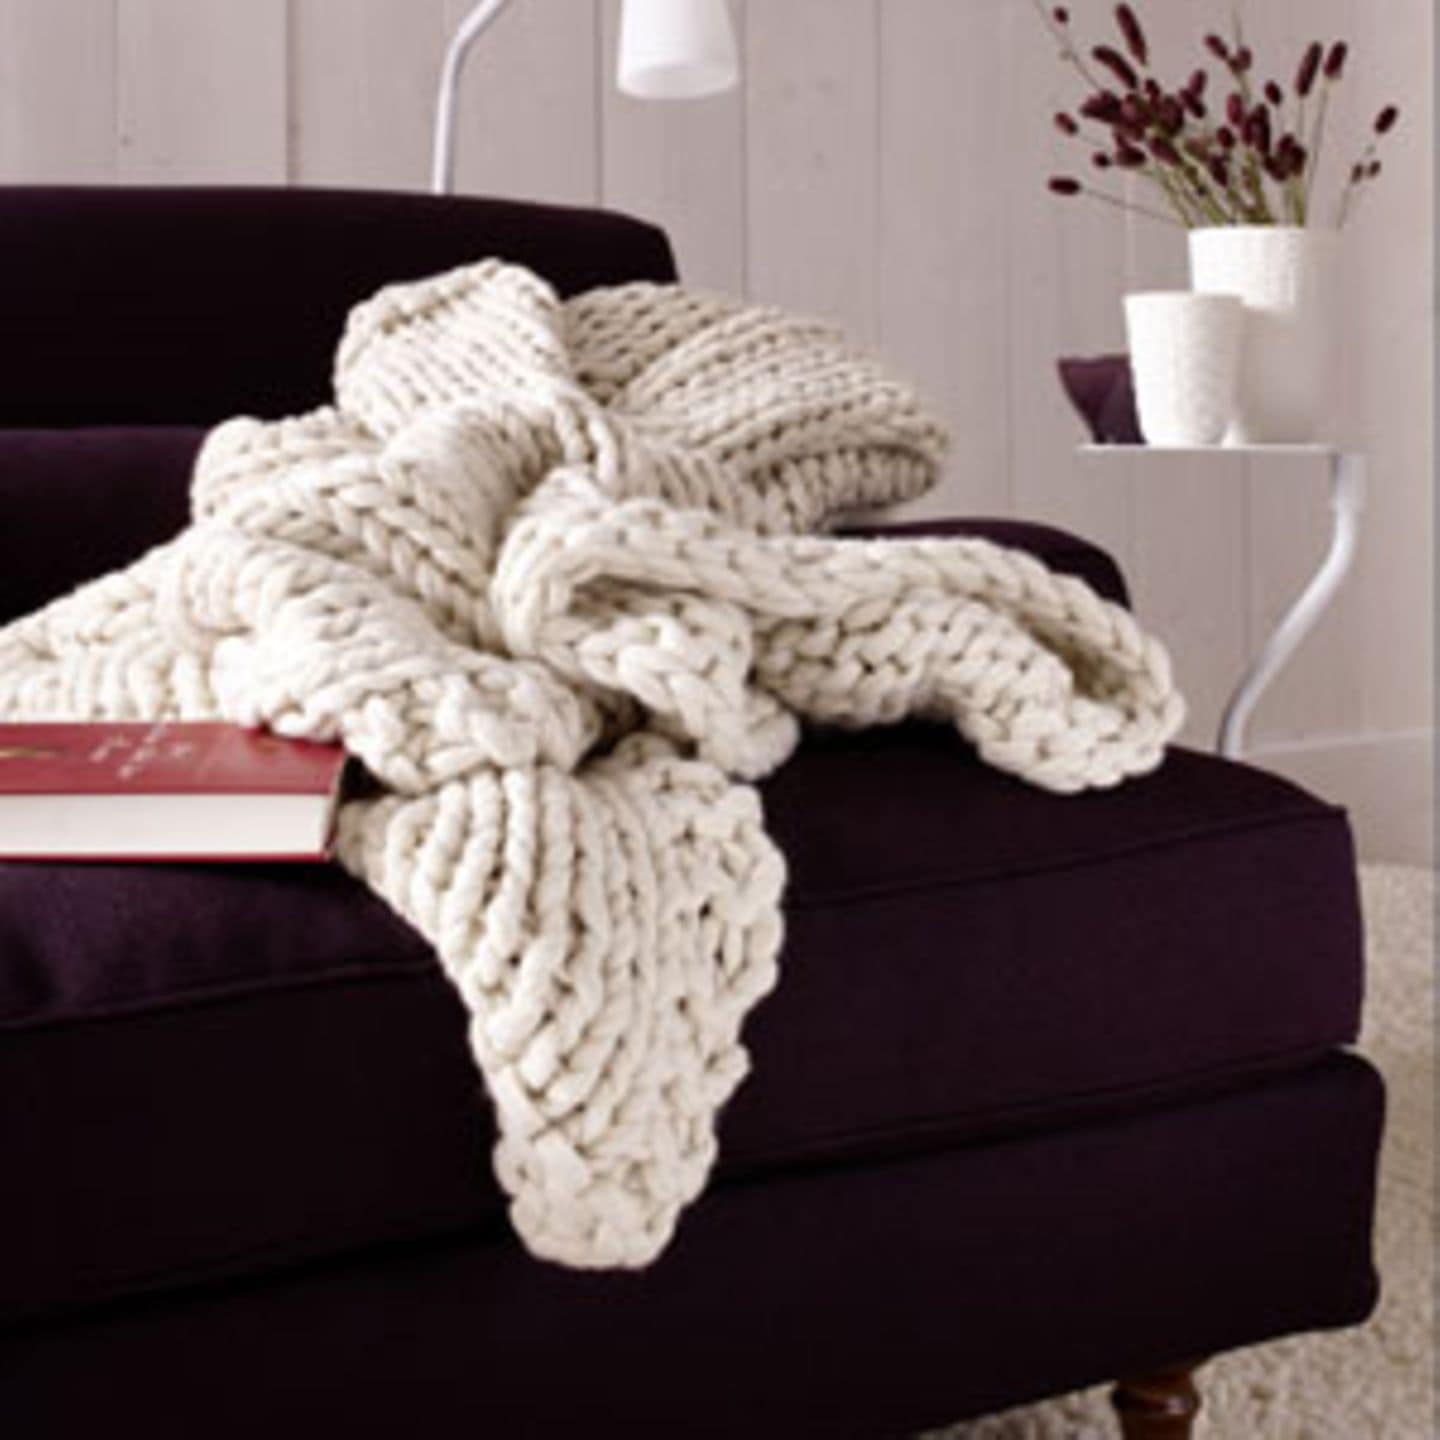 Sofa in Violett